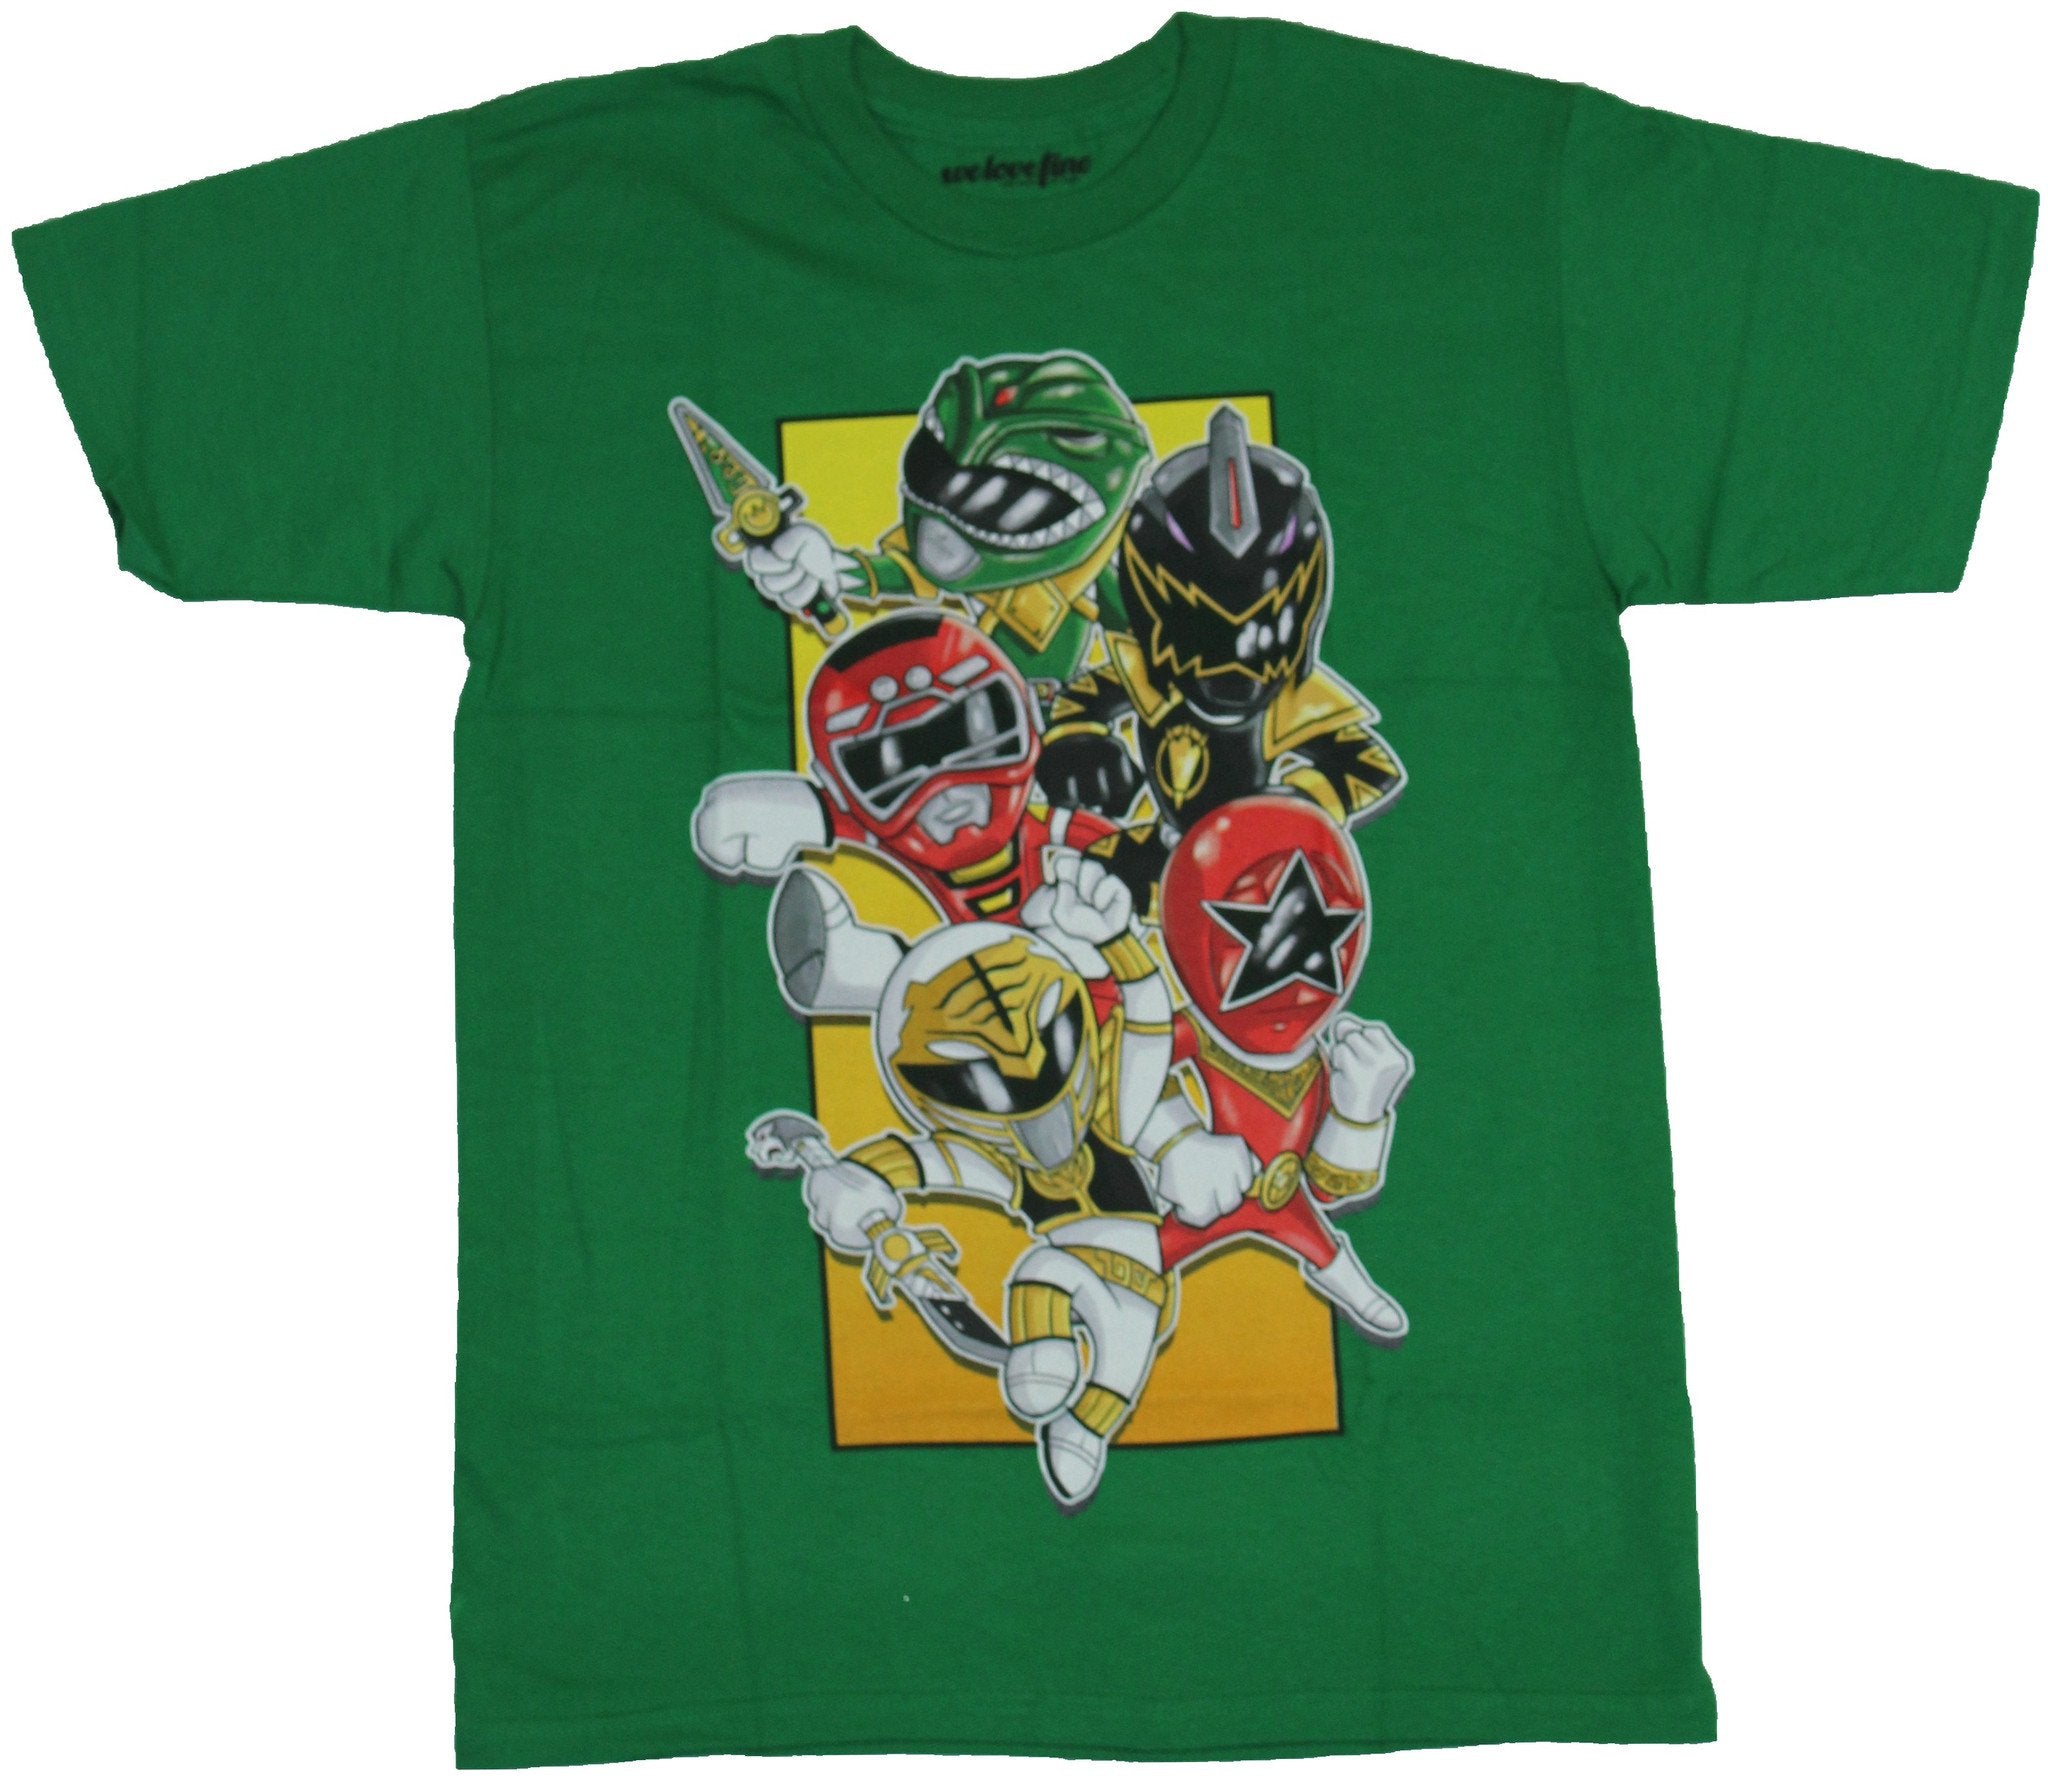 Mighty Morphin Power Rangers Mens T-Shirt - Big Headed 5 Ranger Cutie Crew